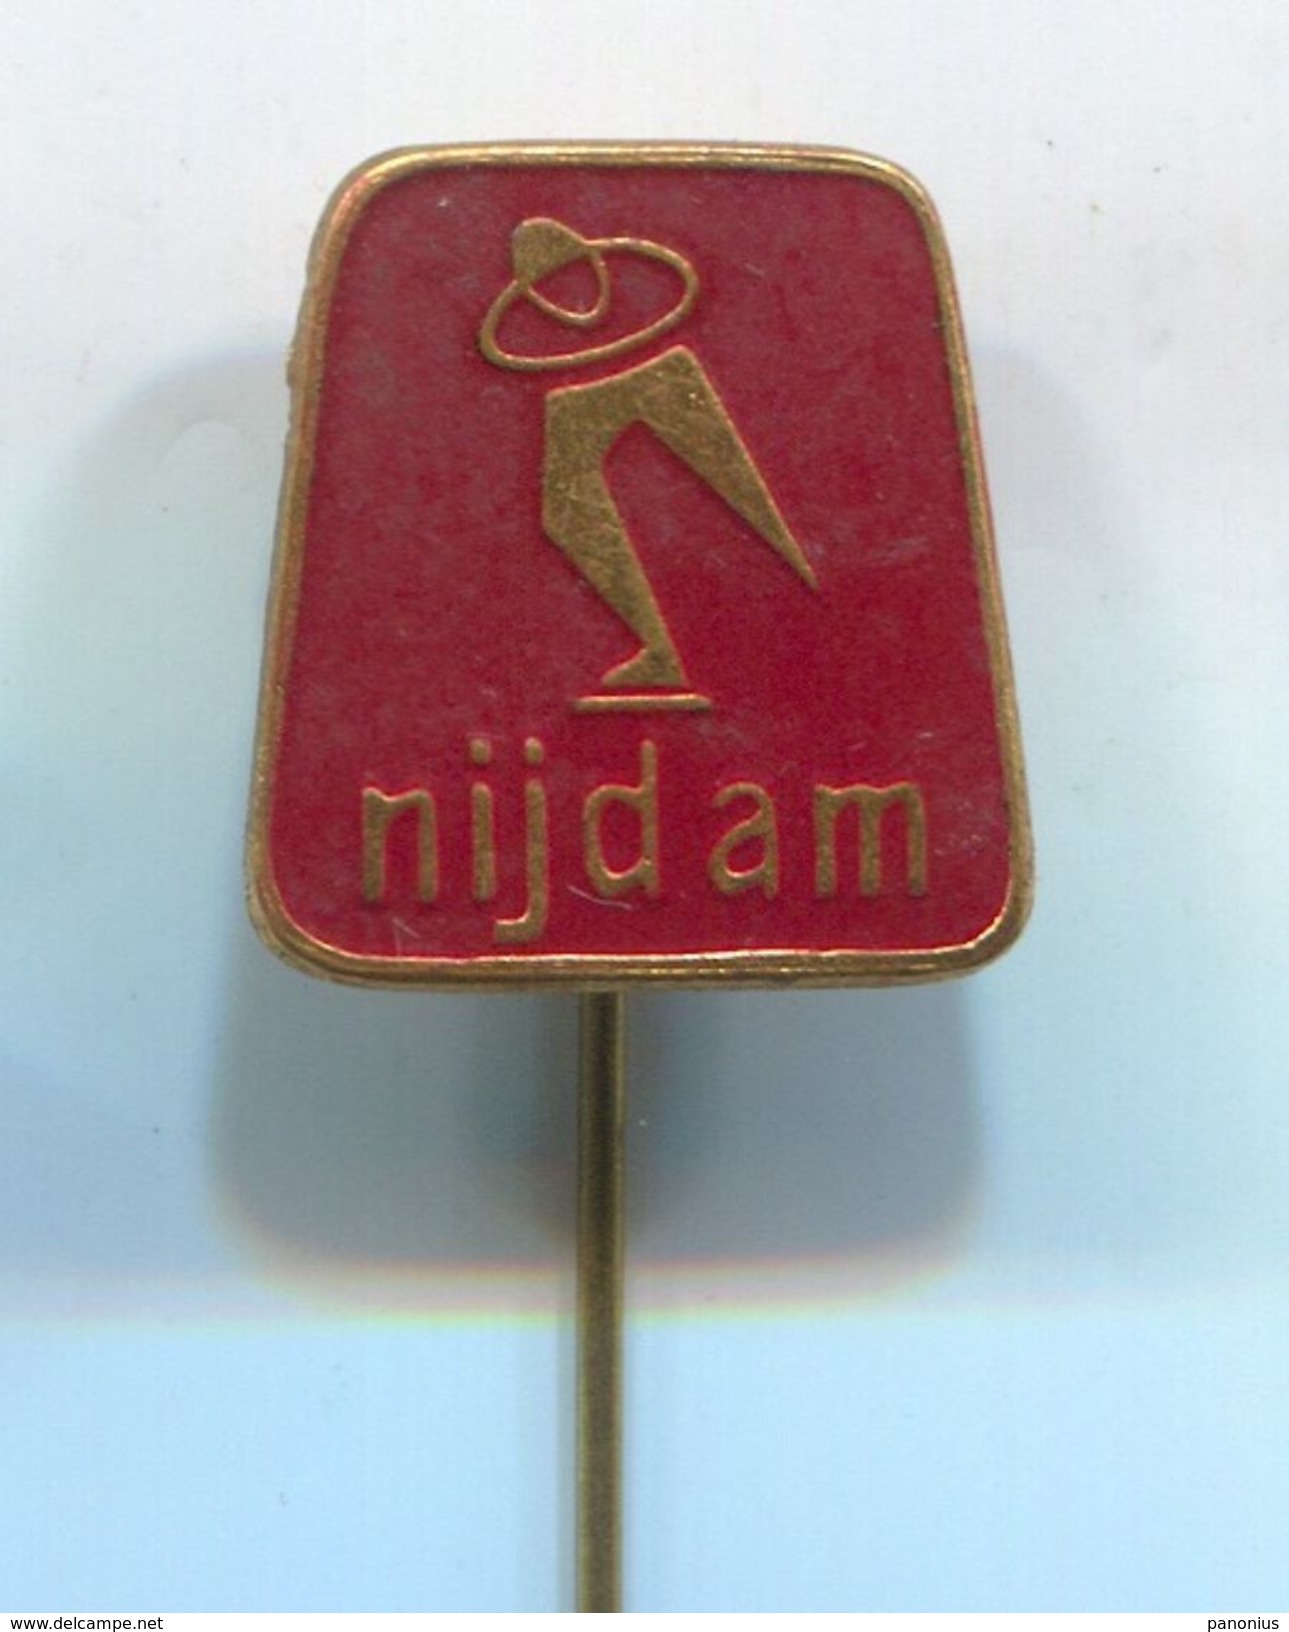 Ice Figure Skating - NIJDAM, Vintage Pin, Badge, Abzeichen - Skating (Figure)